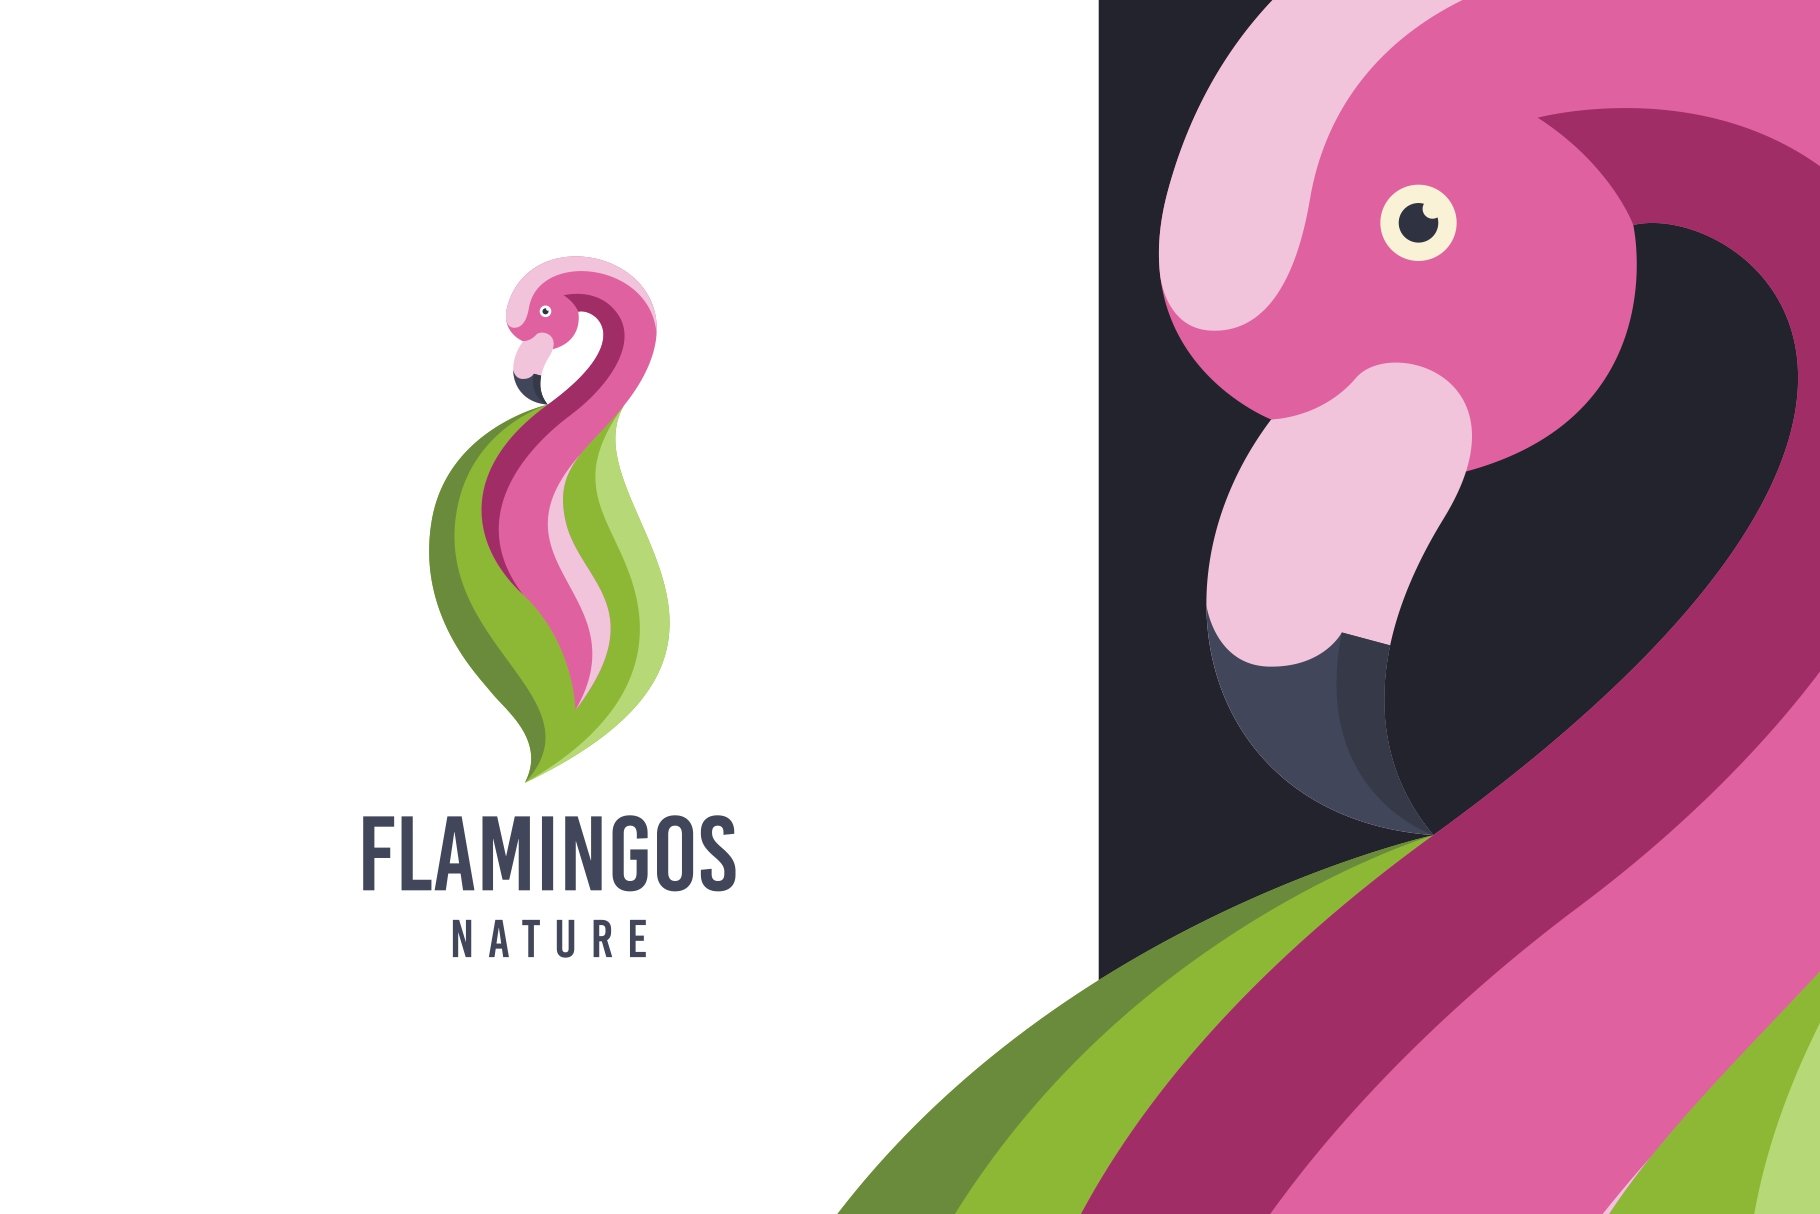 Flamingo Leaf Logo Template cover image.